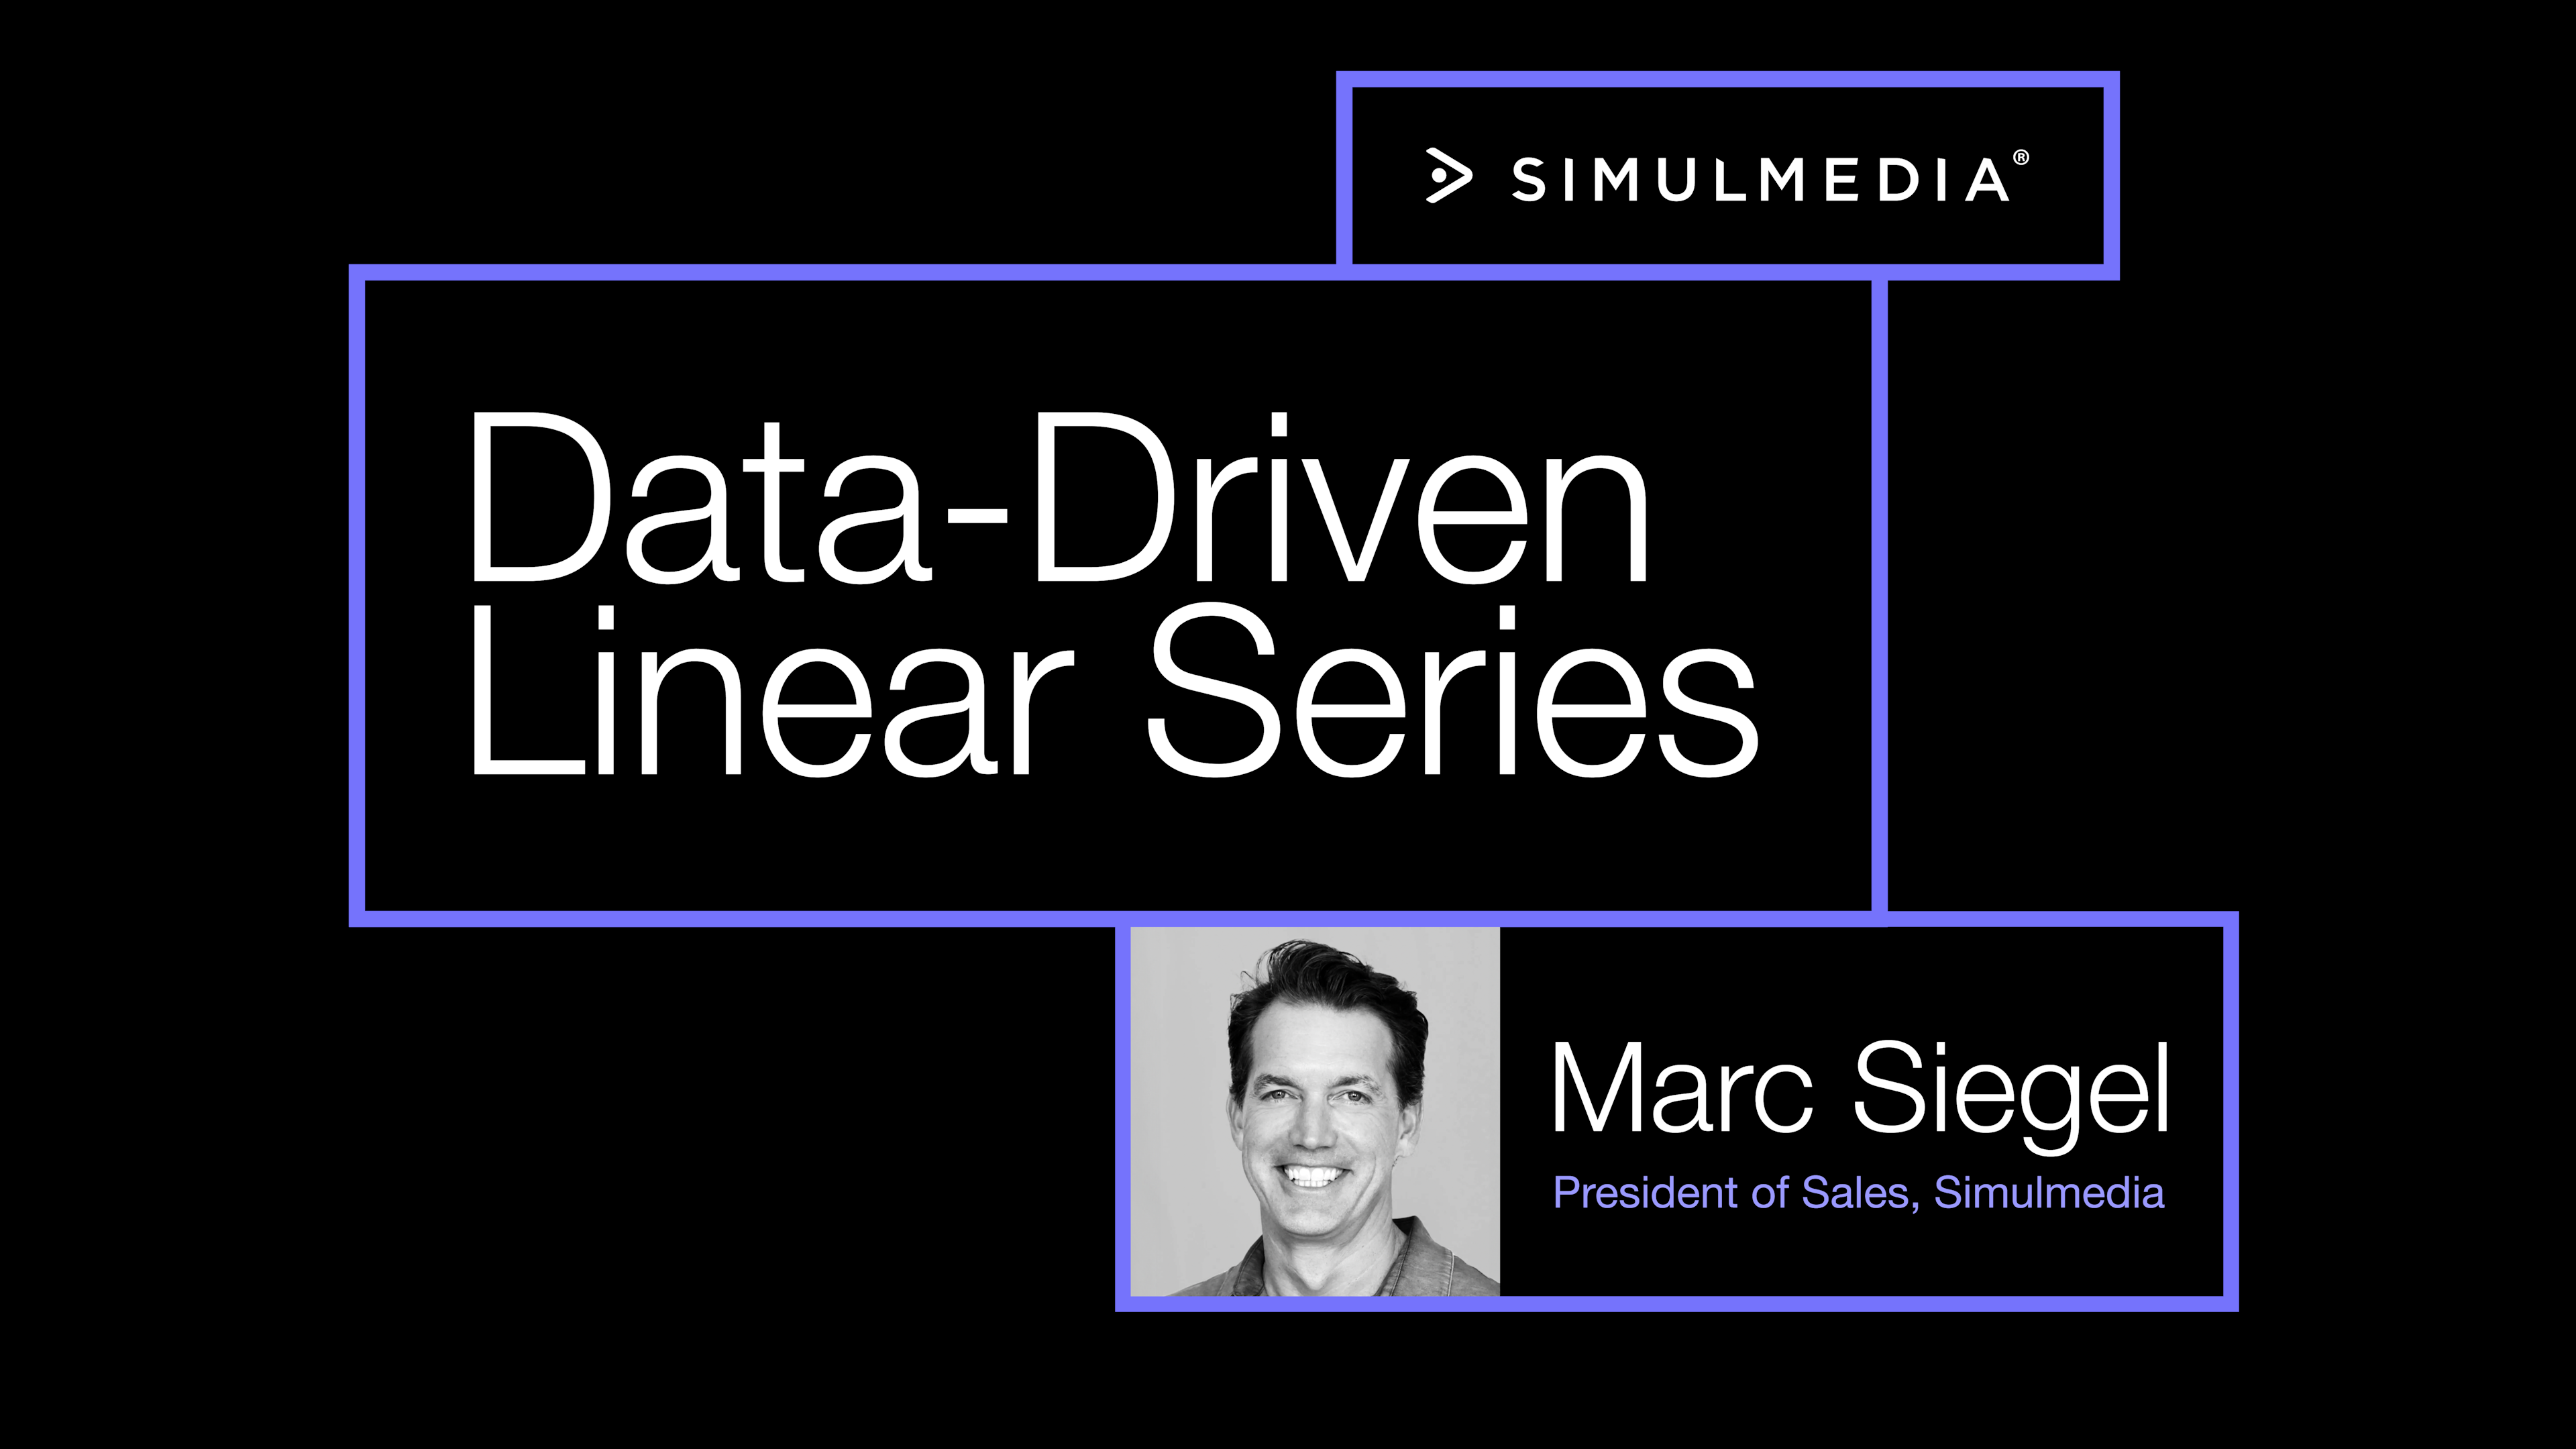 Data-driven linear series